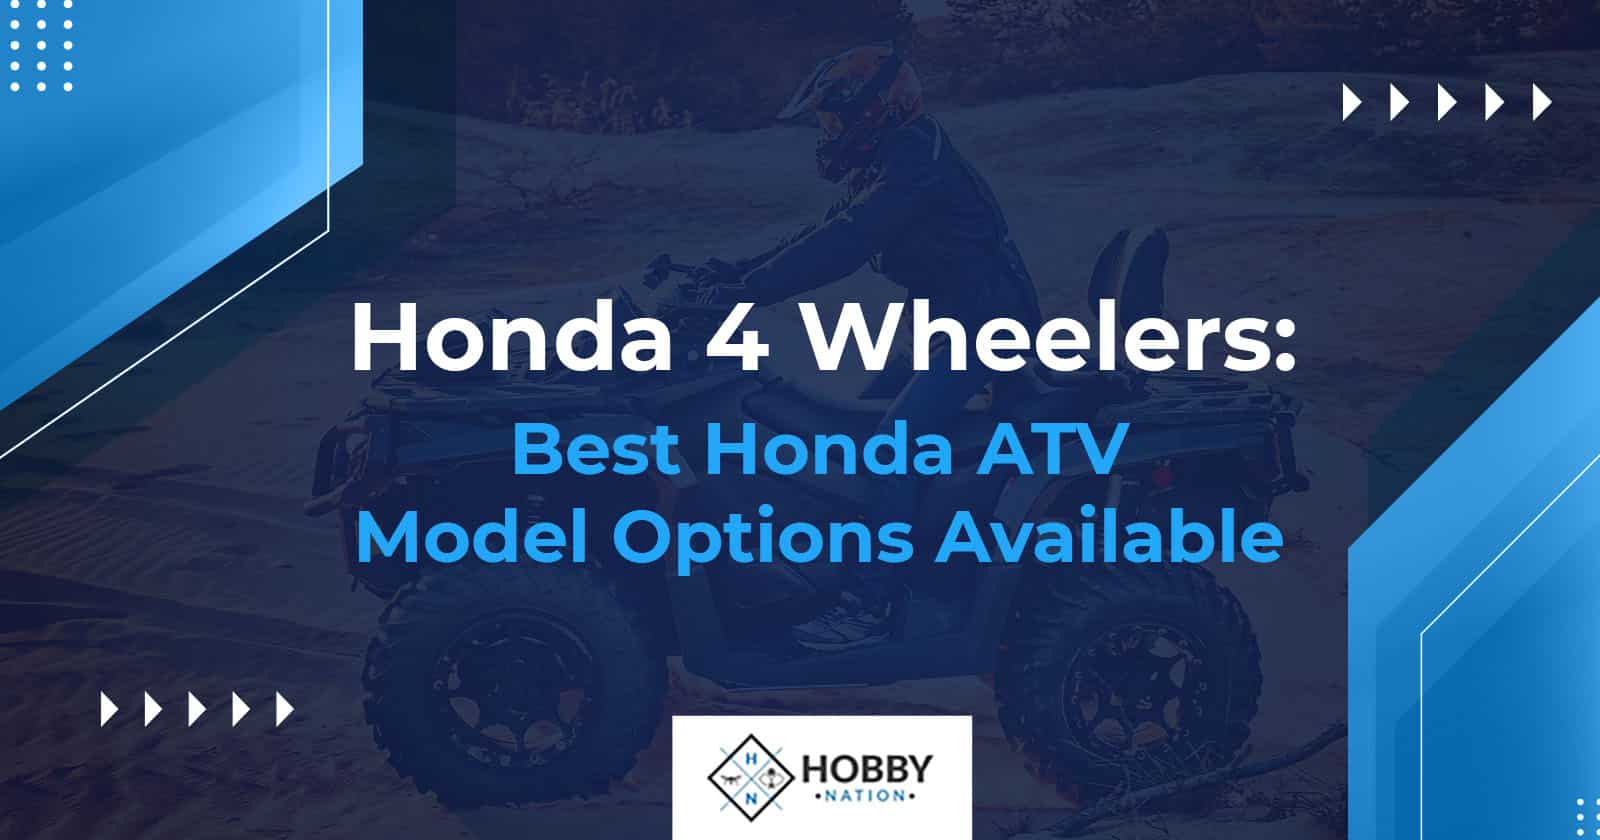 Honda 4 Wheelers: Best Honda ATV Model Options Available